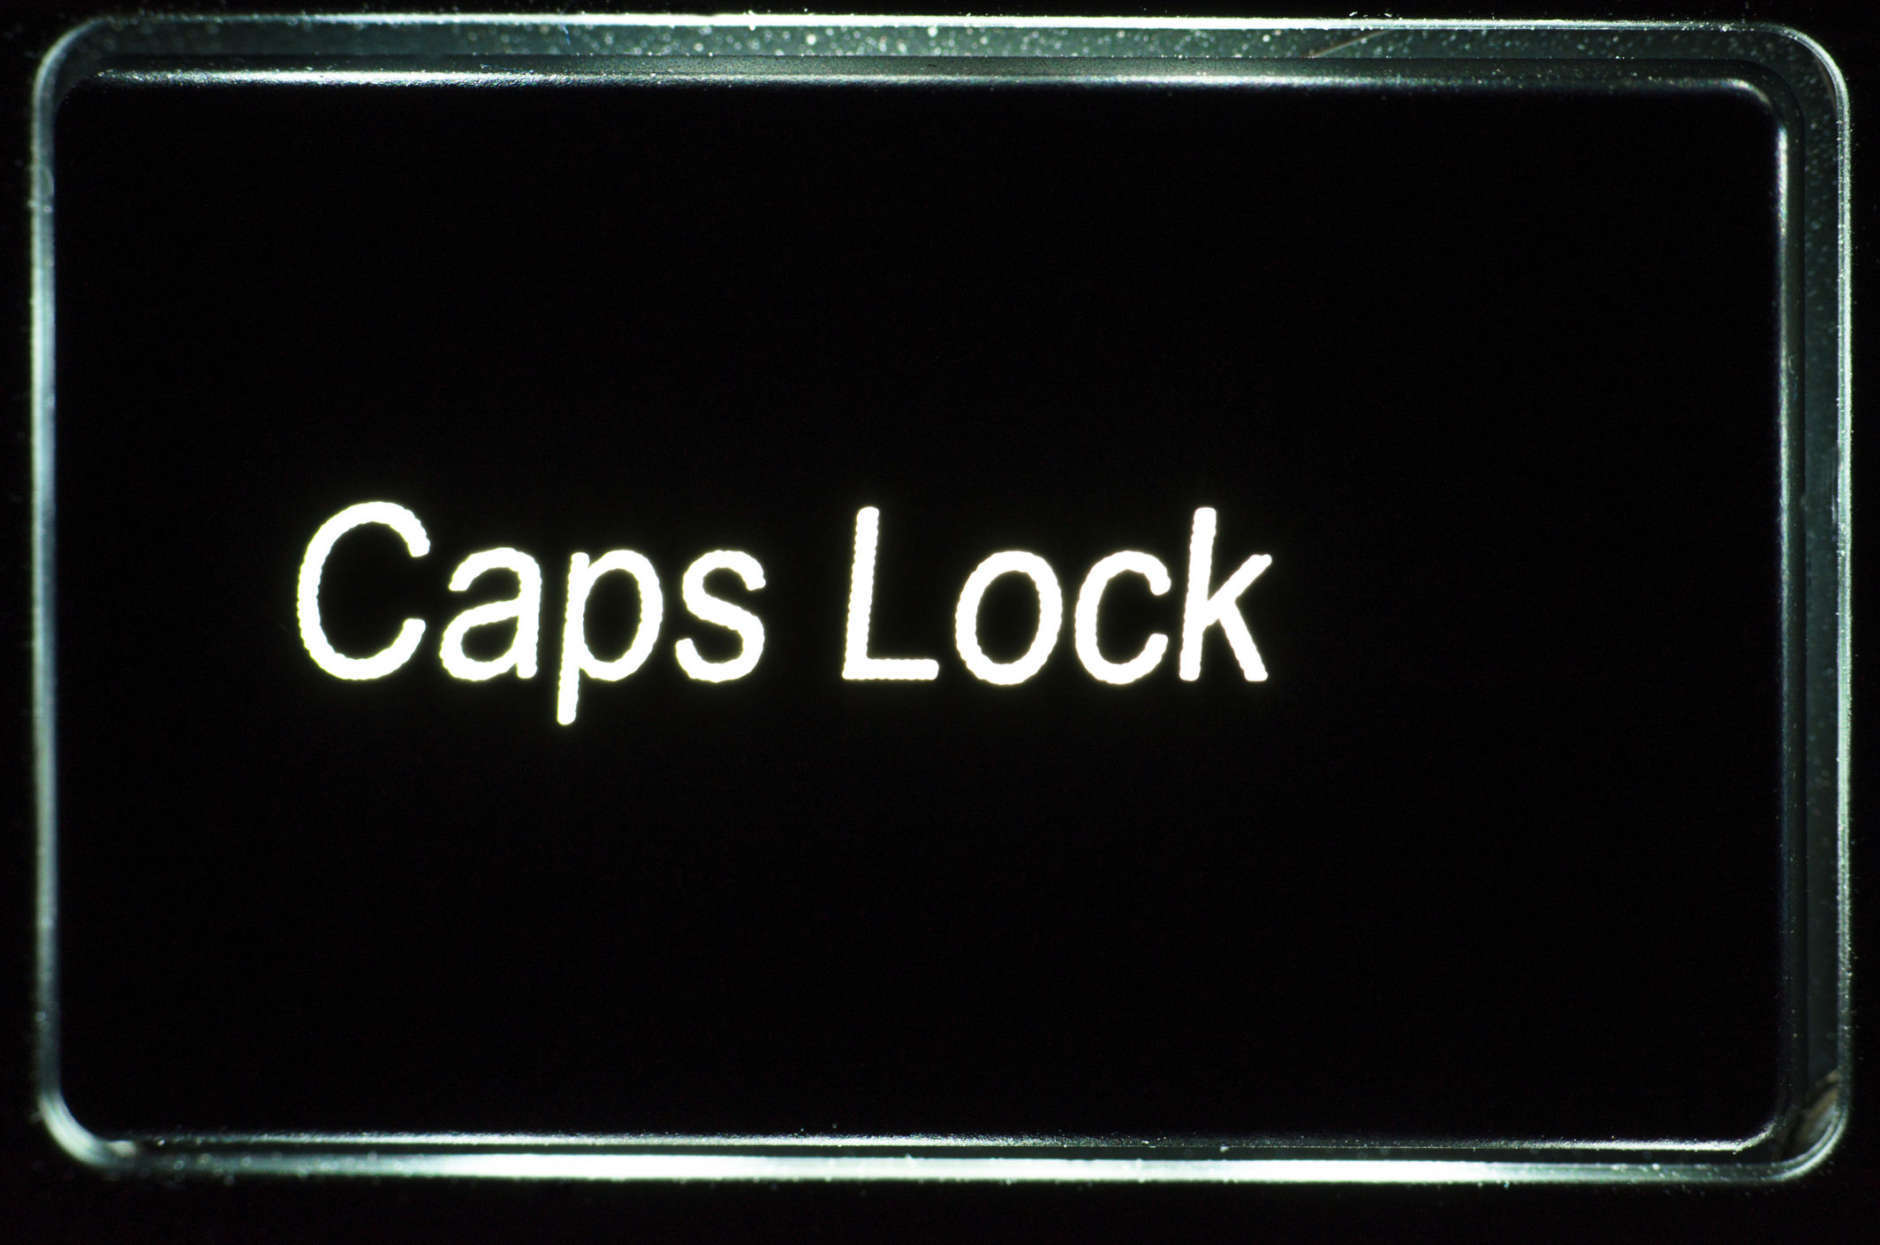 Caps lock button on keyboard